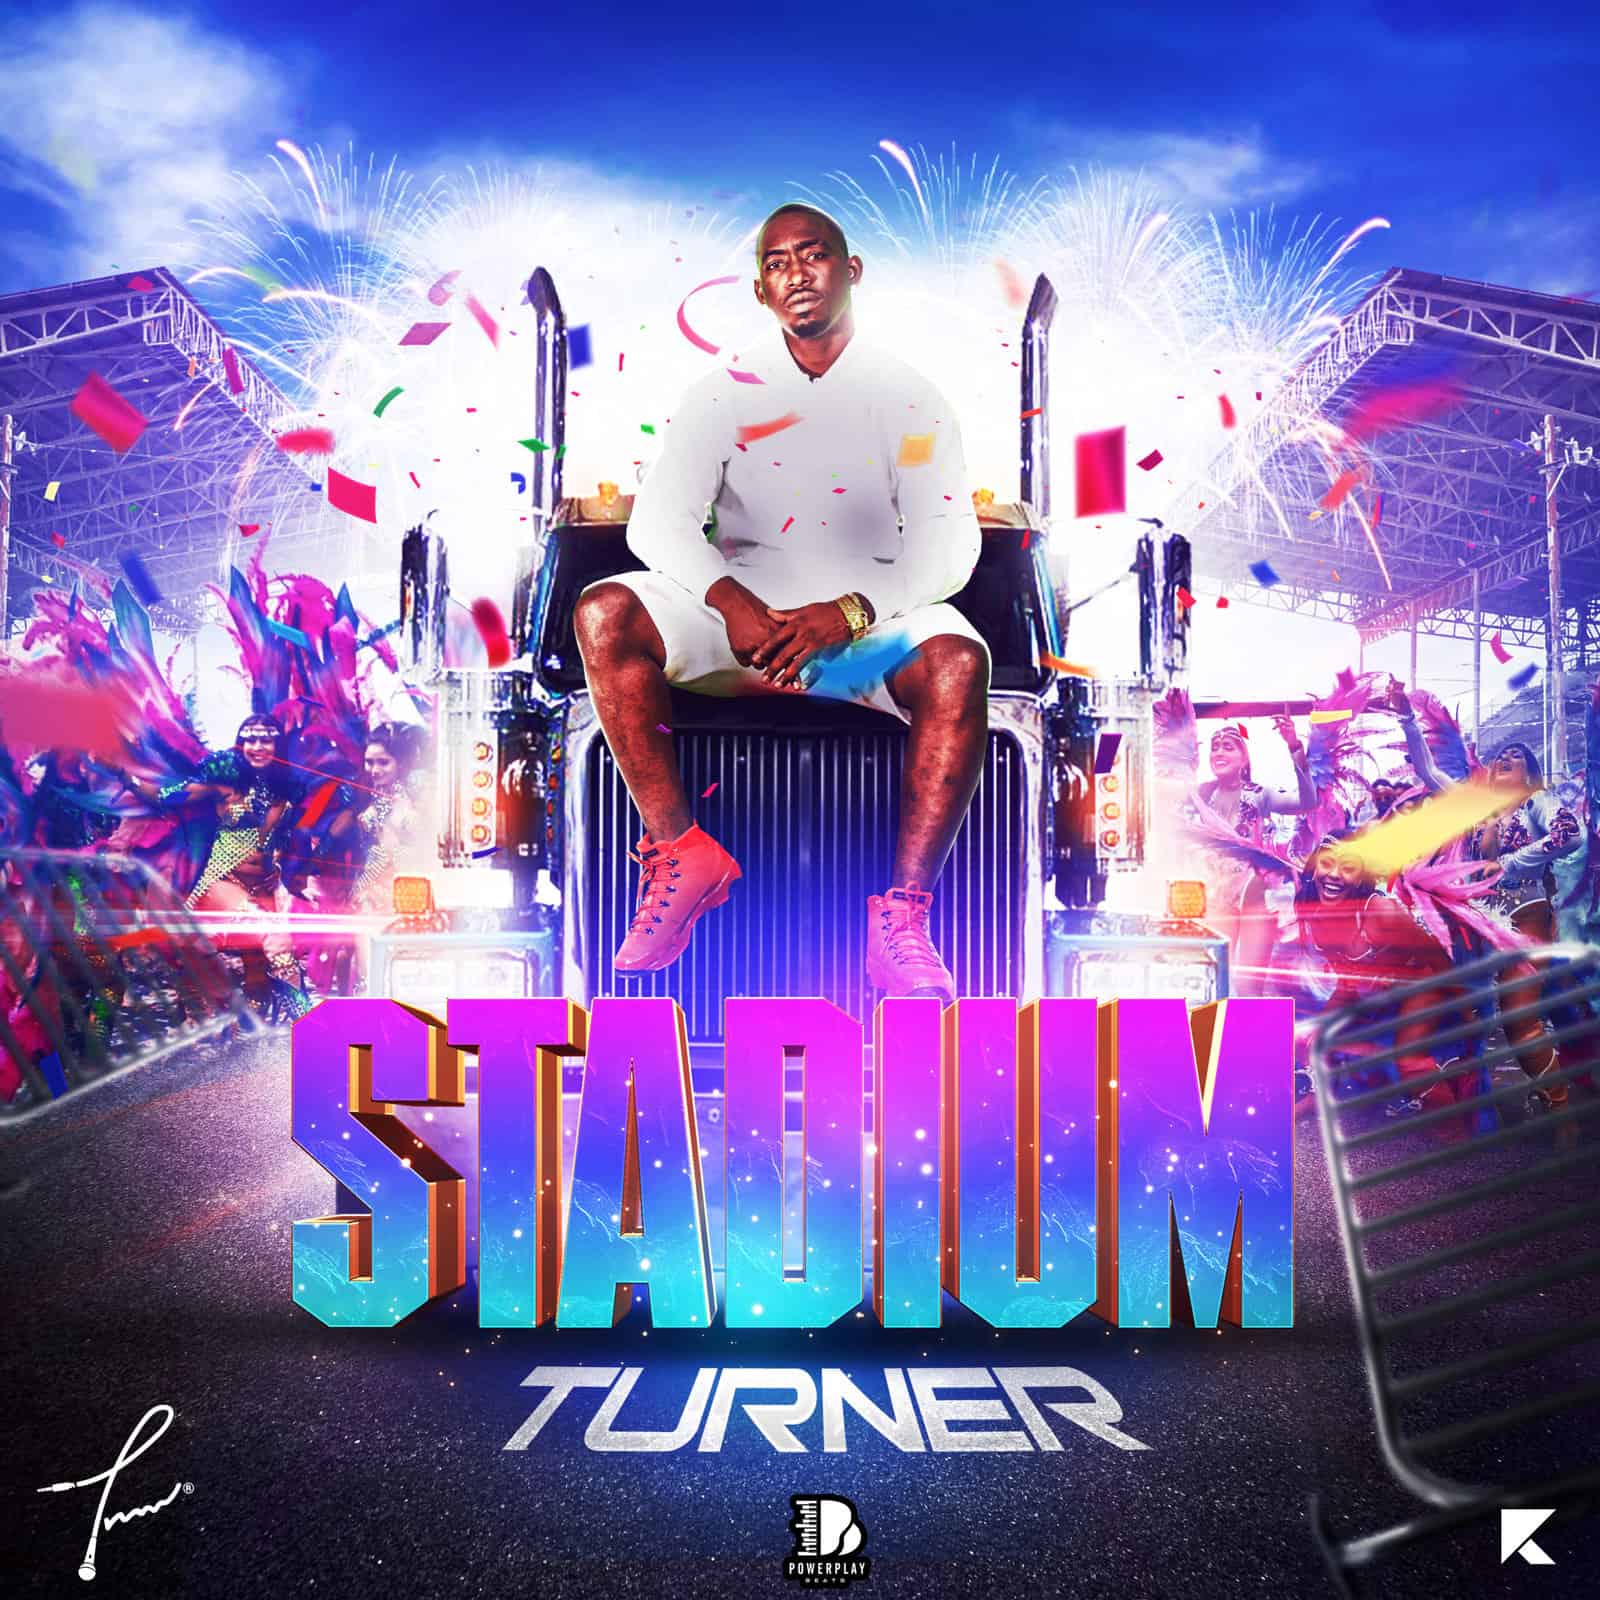 Turner - Stadium